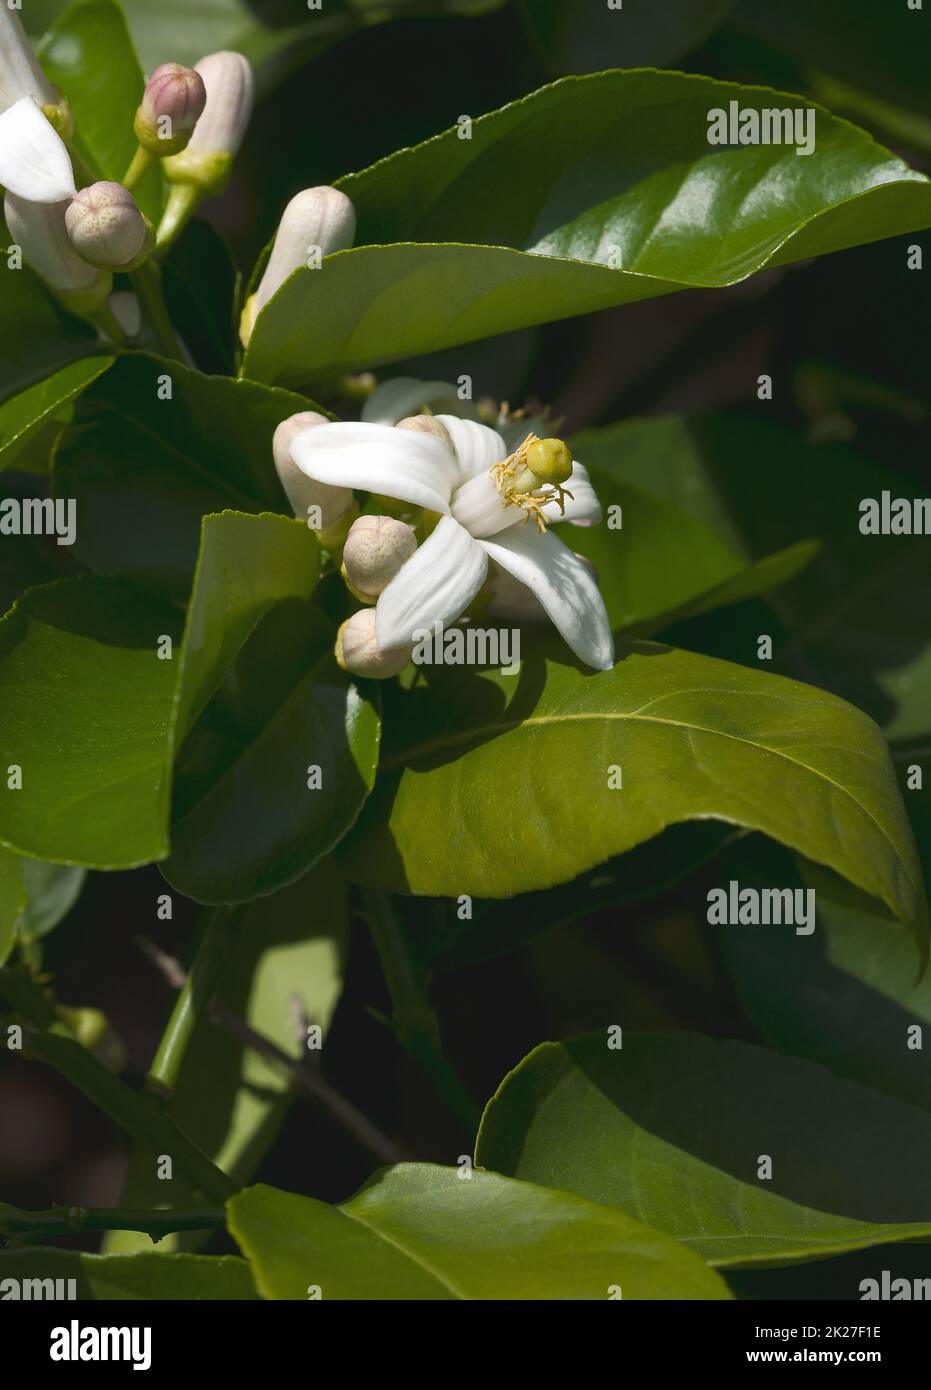 Close-up image of American wonder lemon flowers Stock Photo